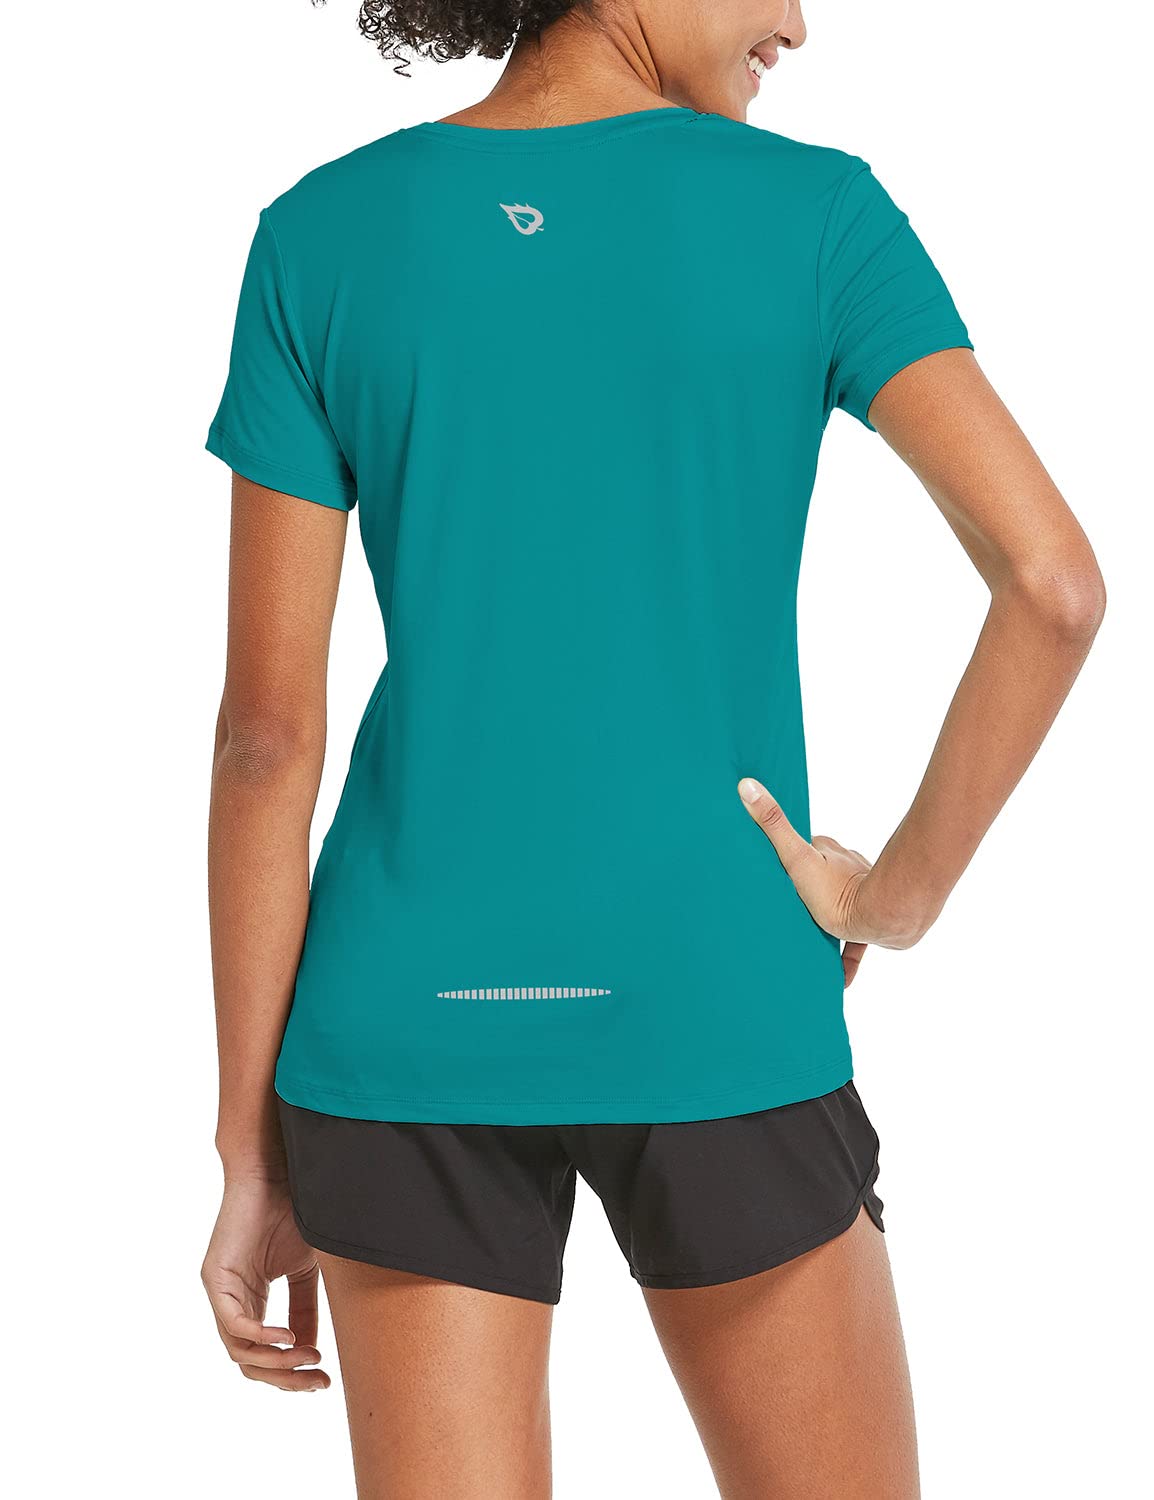 Baleaf Men's Quick Dry Short Sleeve T-Shirt Running Workout Shirts Black  Size M